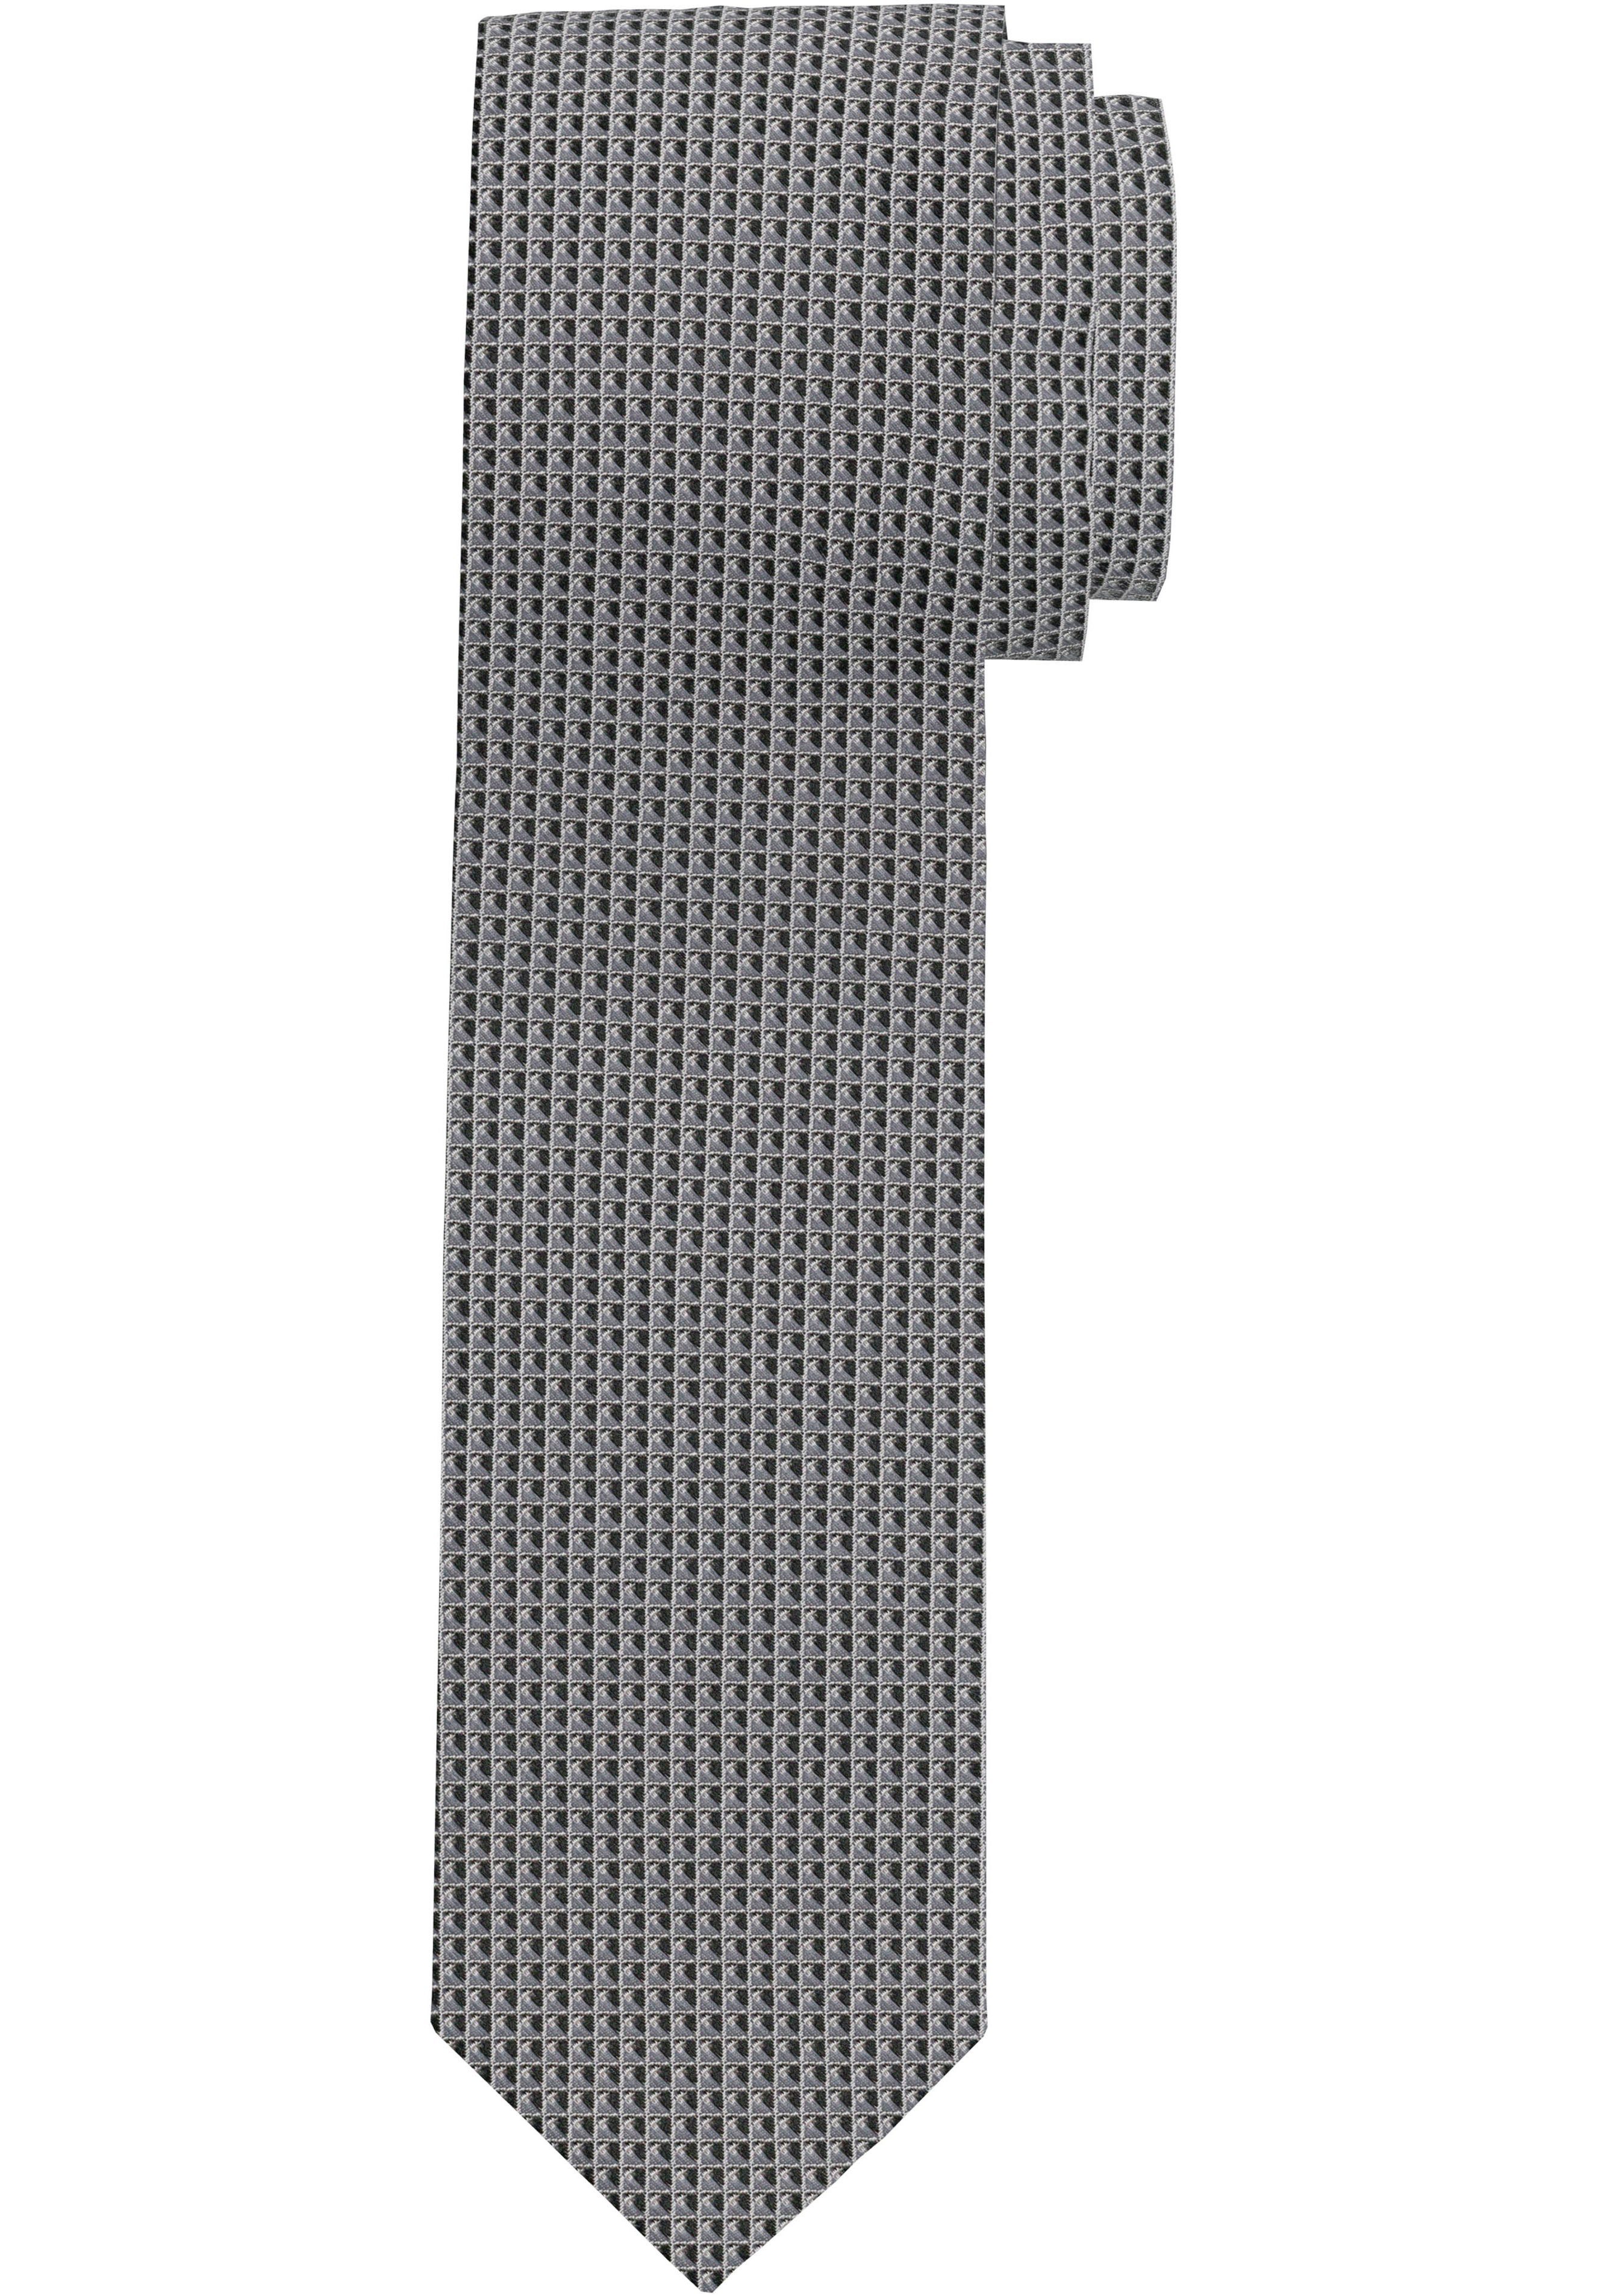 OLYMP Krawatte Strukturierte Krawatte anthrazit | Breite Krawatten